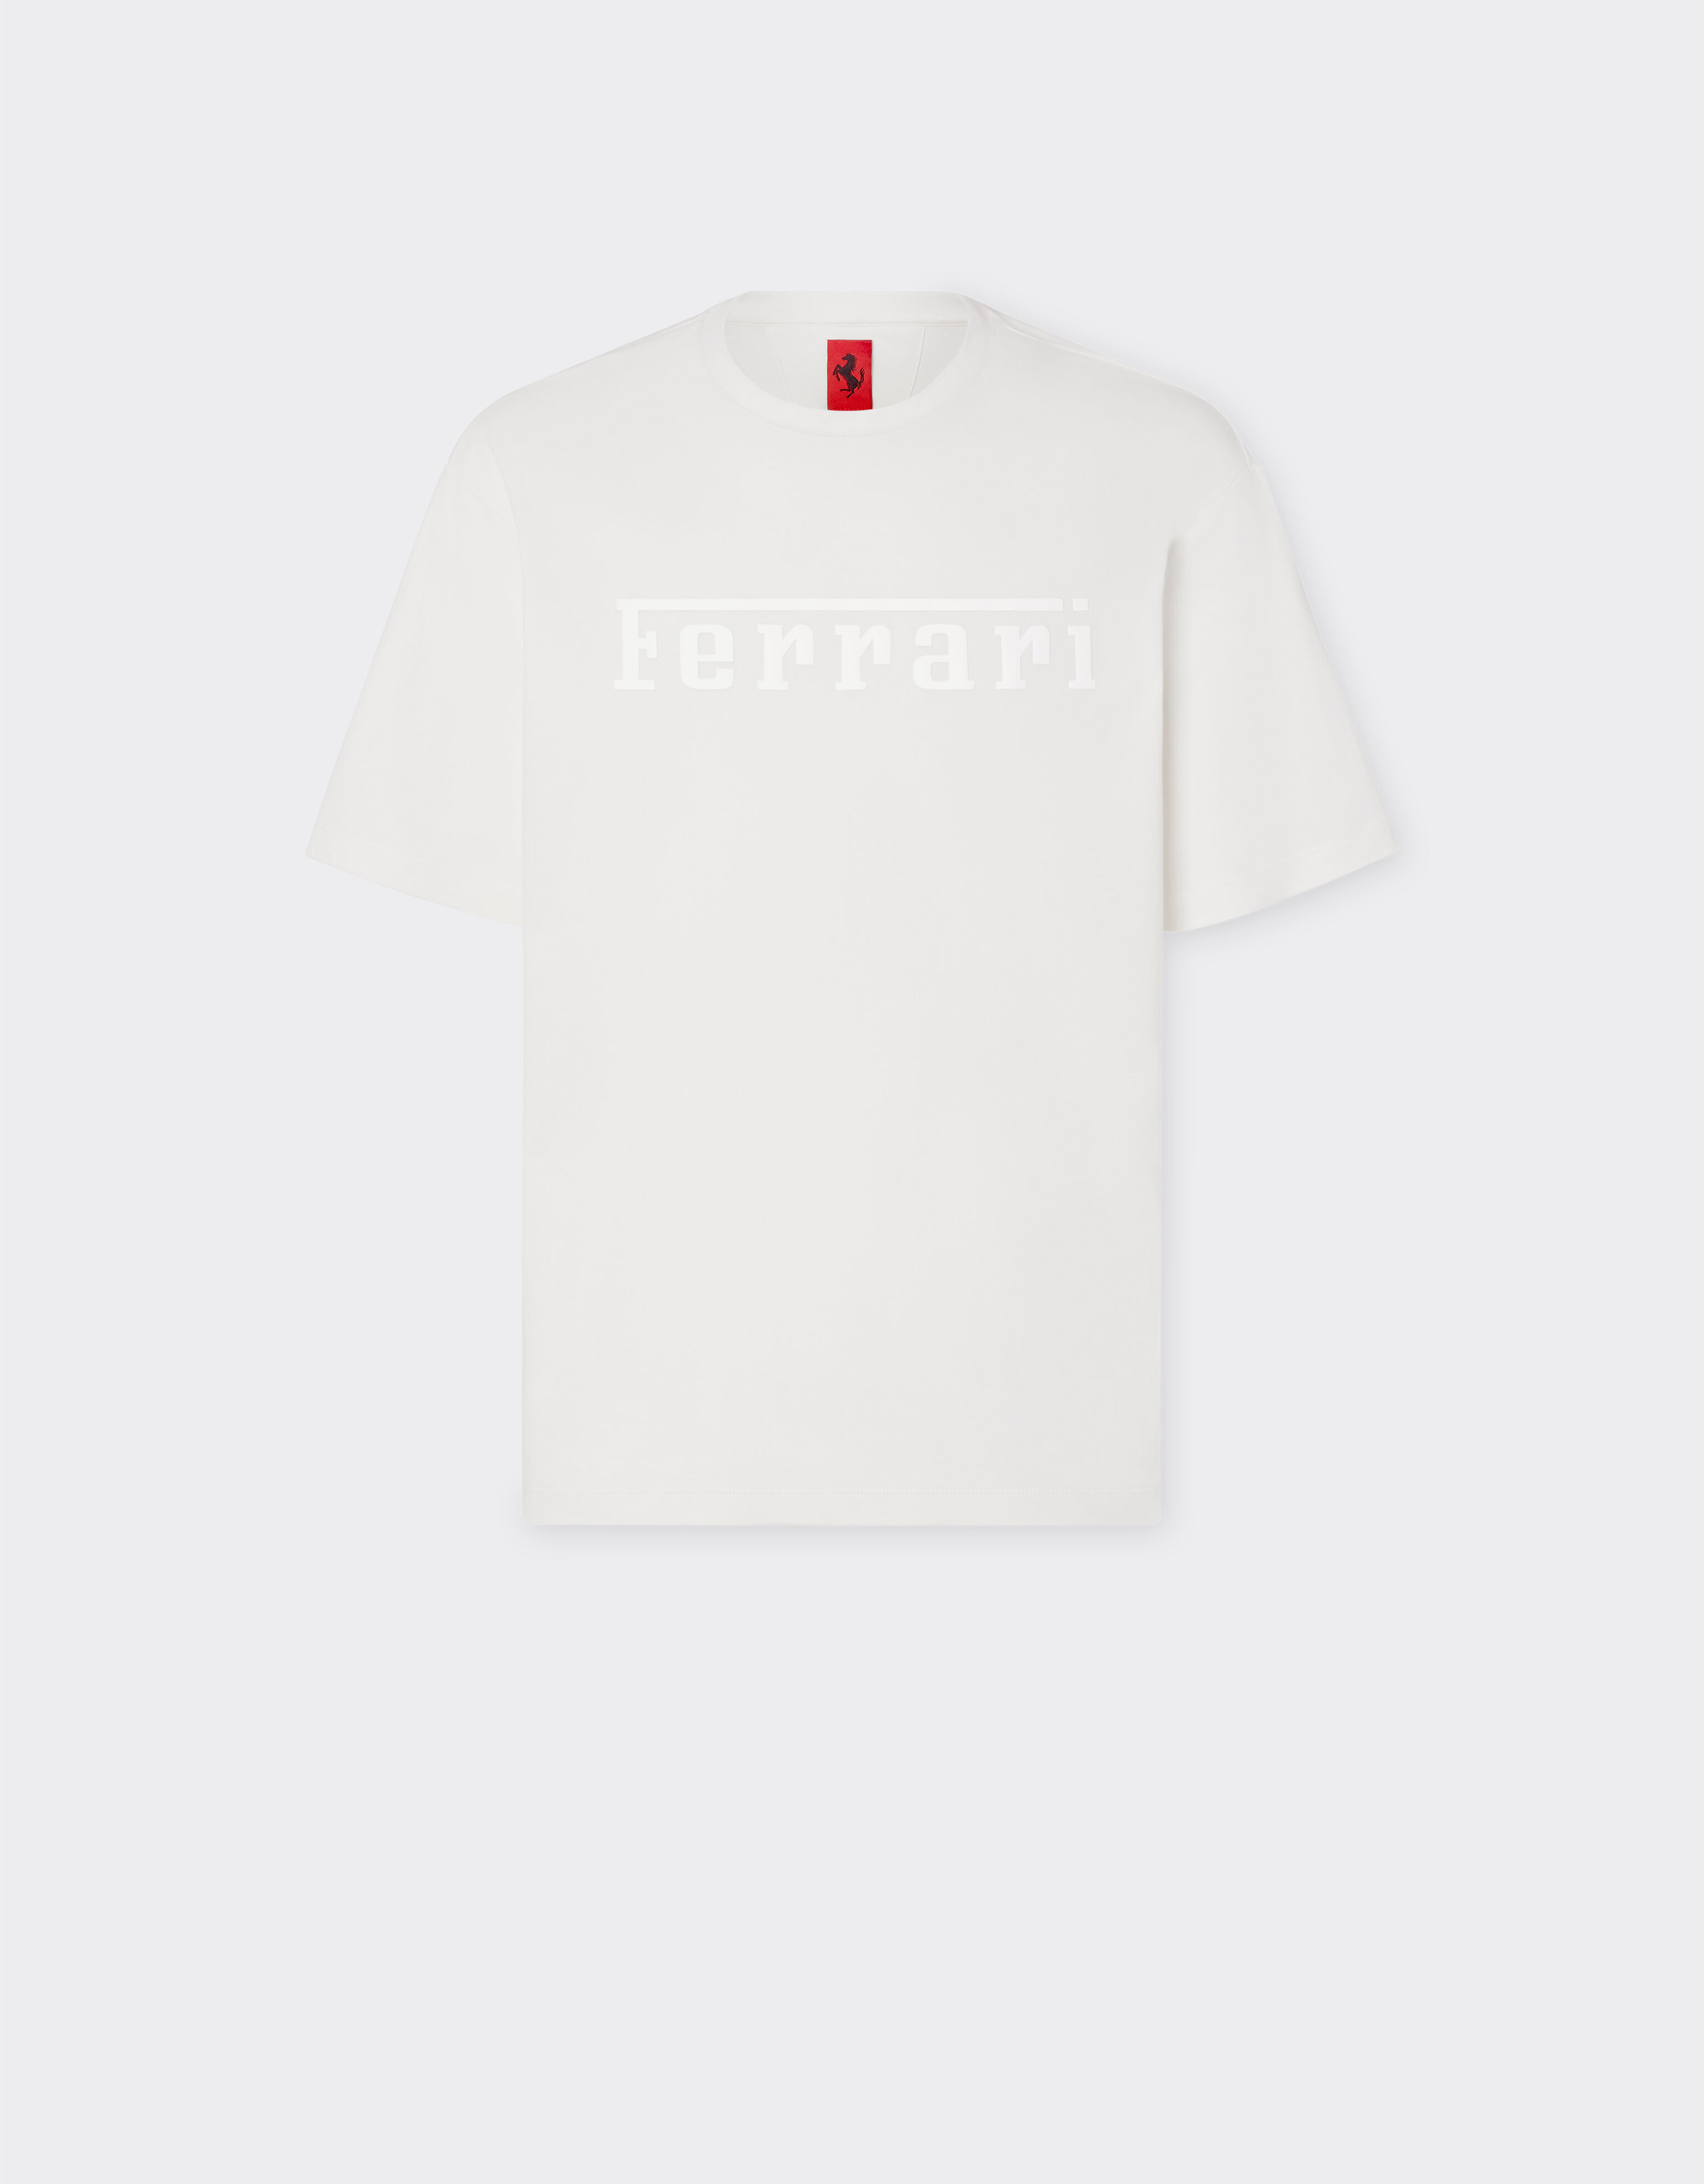 Ferrari Camiseta de algodón con logotipo Ferrari Negro 48115f